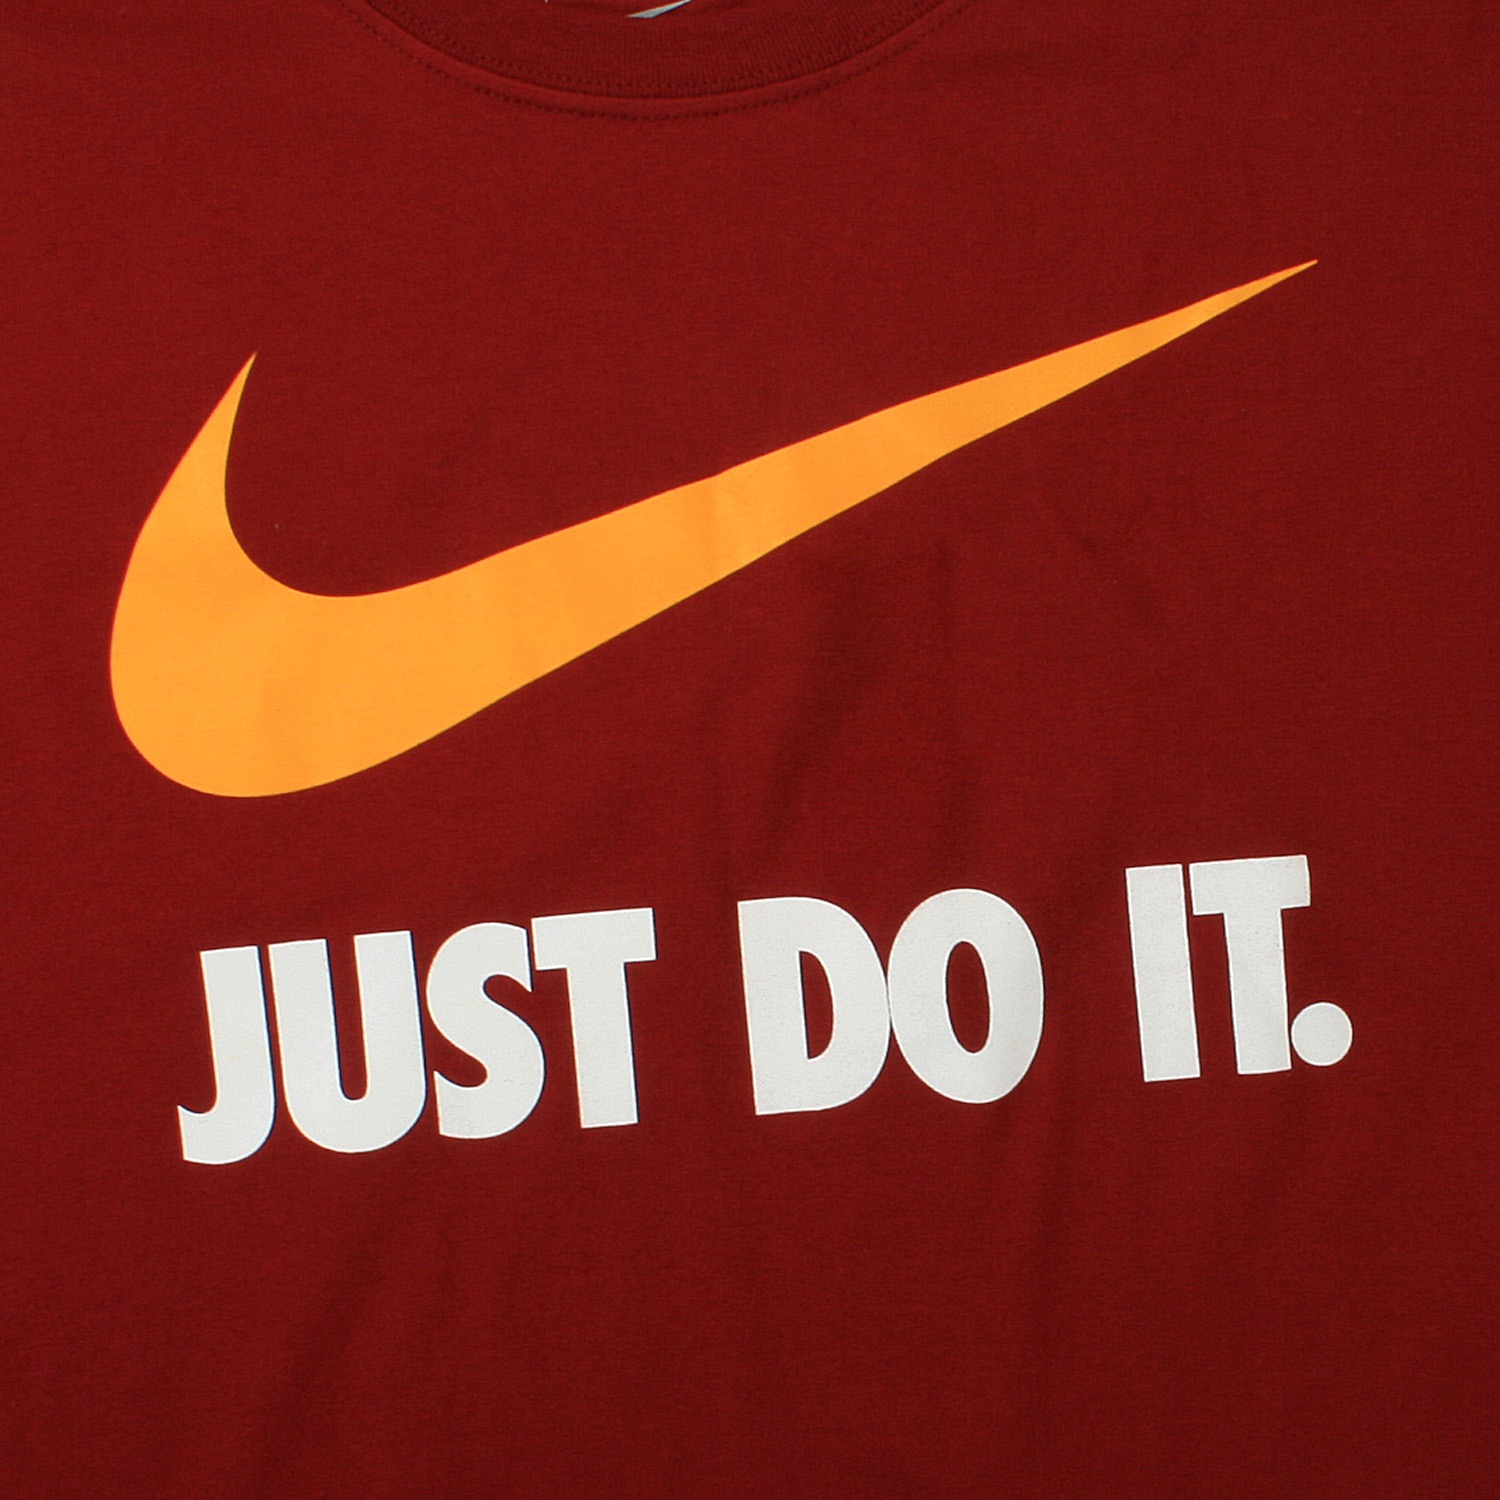 Just do it слоган. Слоган найк. Nike лозунг. Nike слоган компании. Слоган Nike just do it.